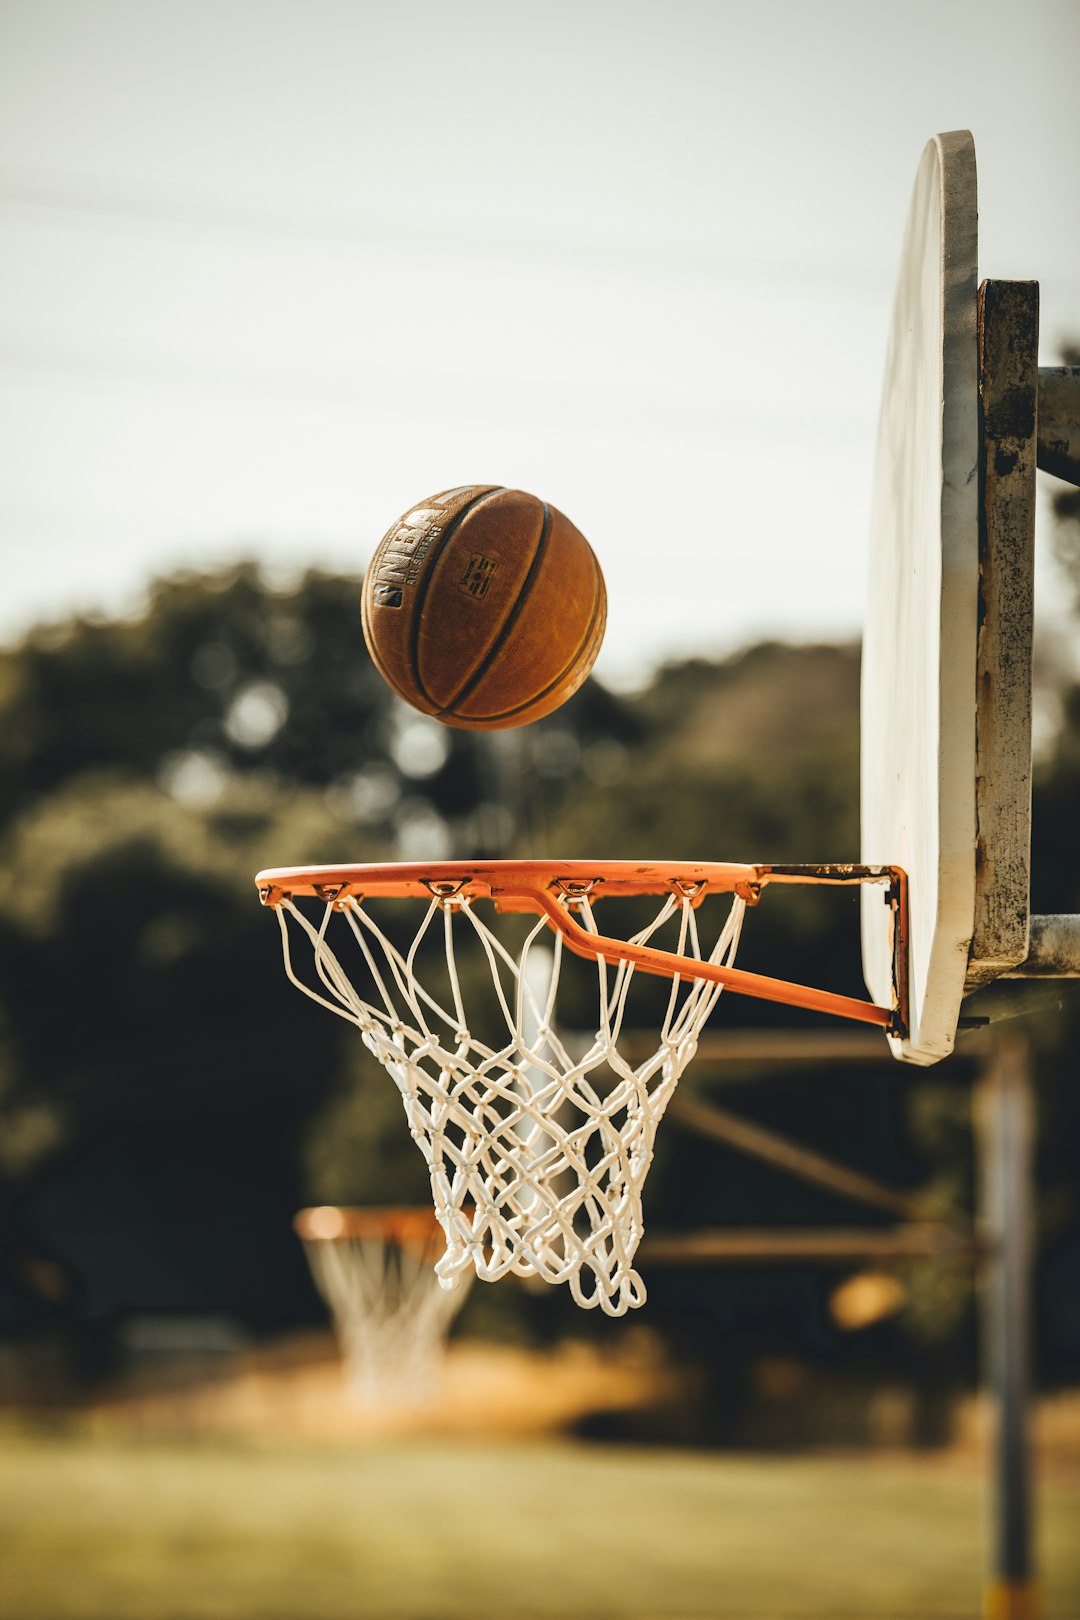 Basketball Receivables Finance For Secured Loans